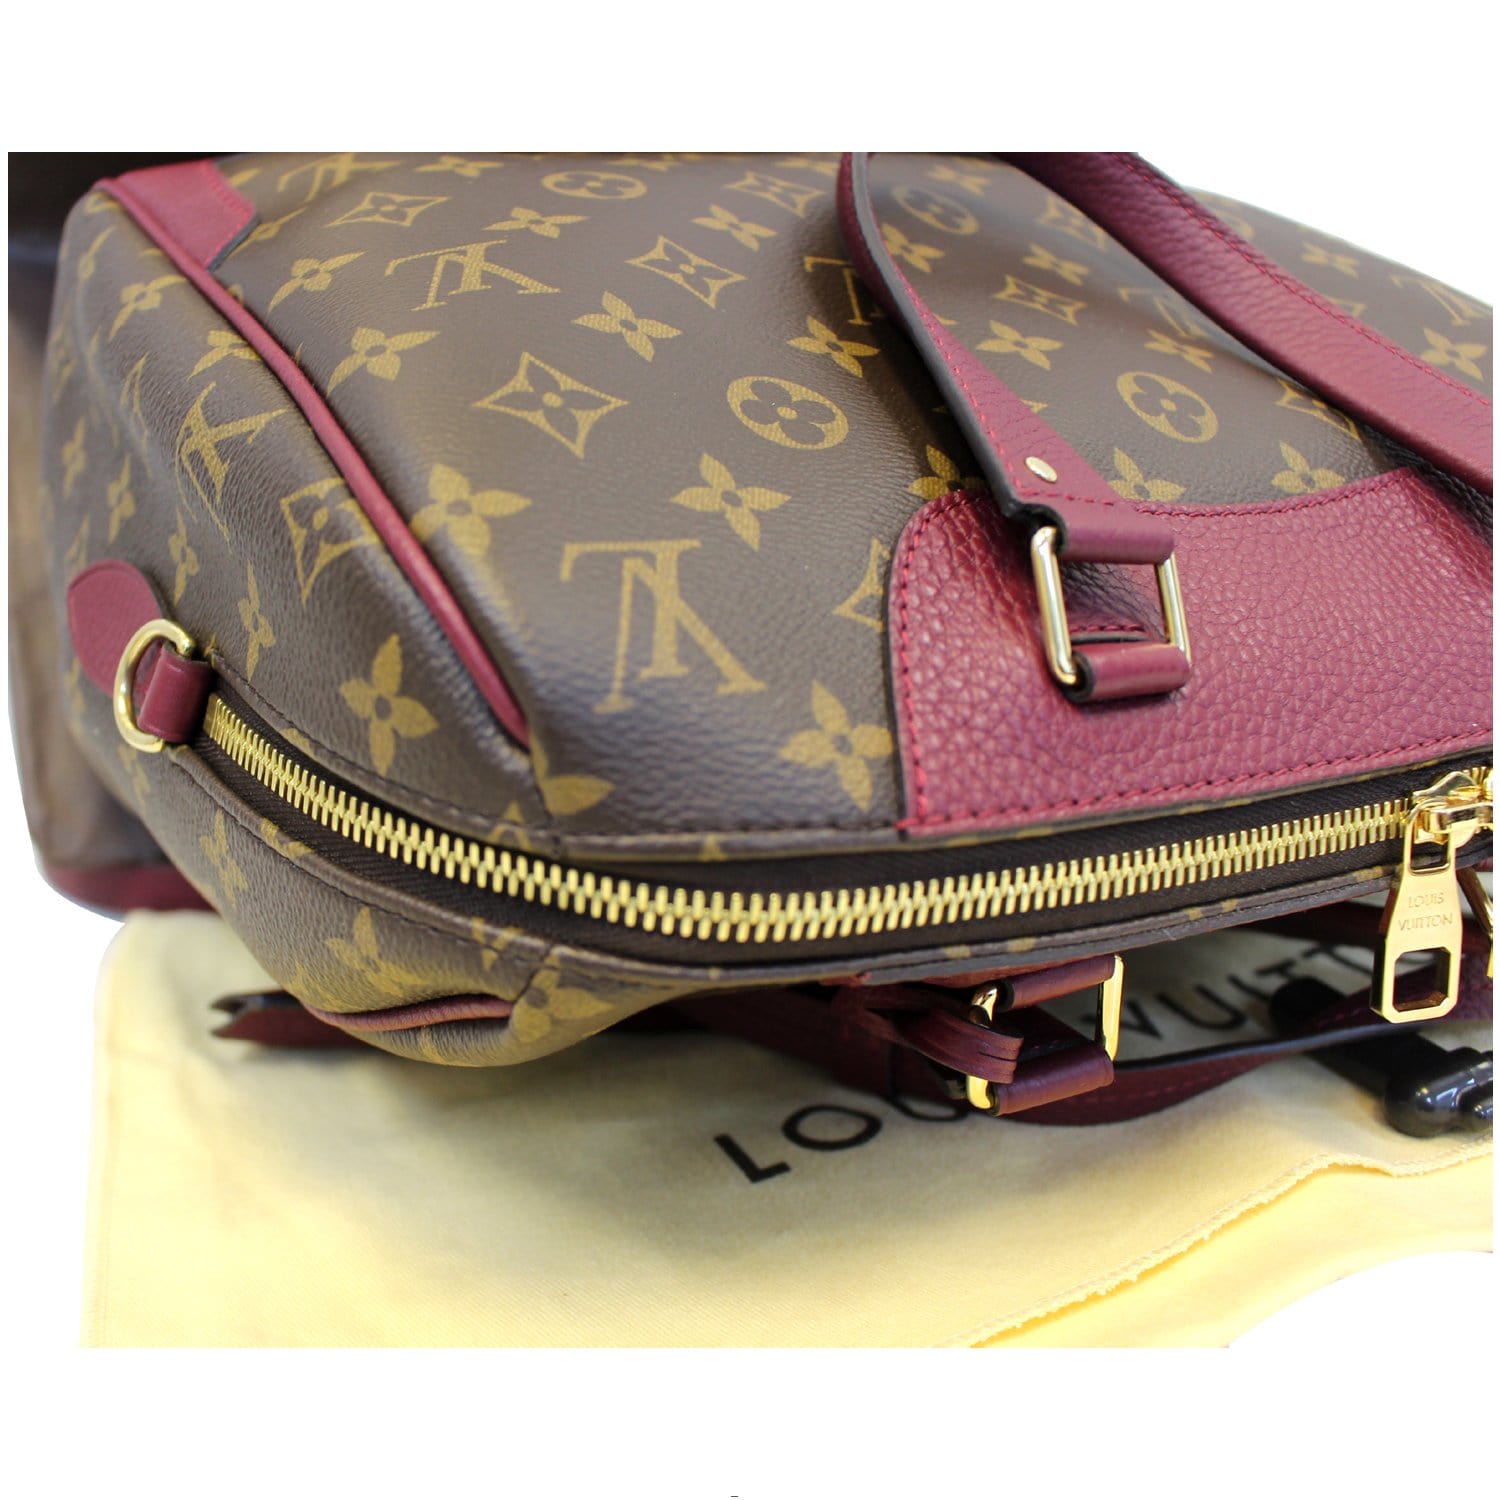 Louis Vuitton Retiro NM Bleu Ciel Bag Review #louisvuitton